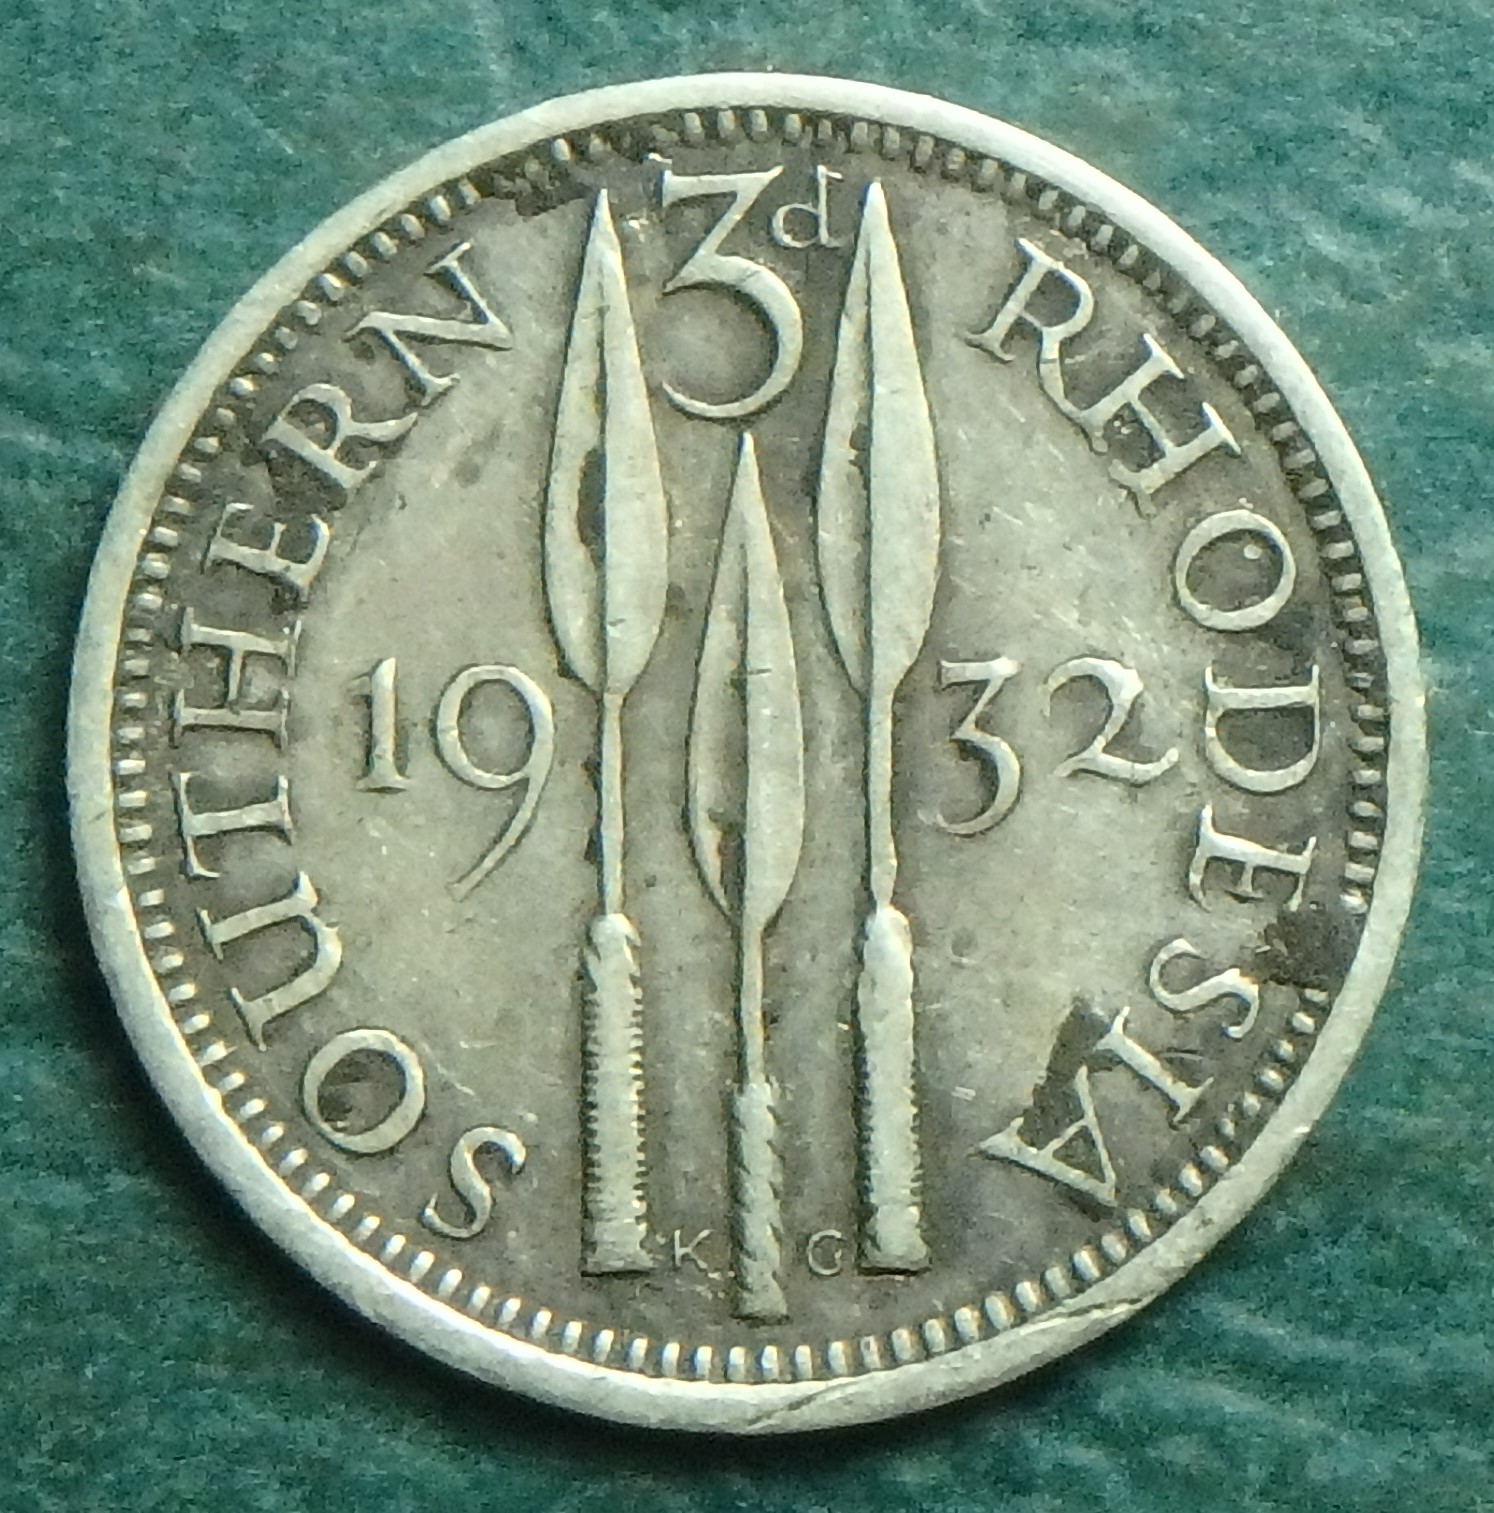 1932 S Rhodesia 3 p rev.JPG